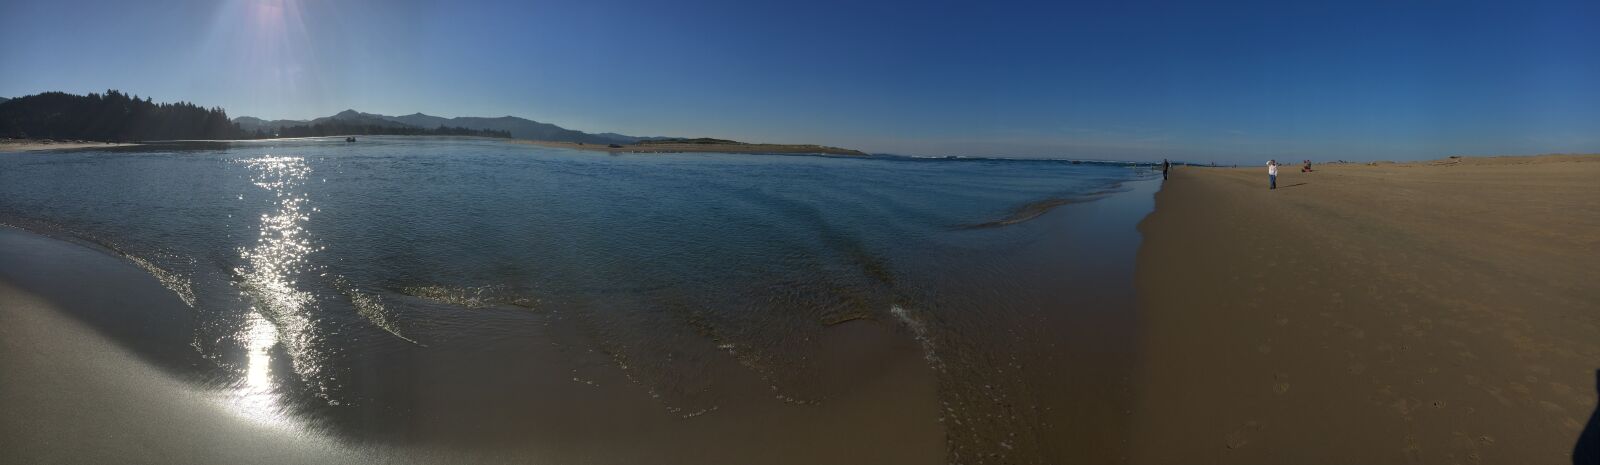 Apple iPhone 6s sample photo. Water, beach, sunset photography